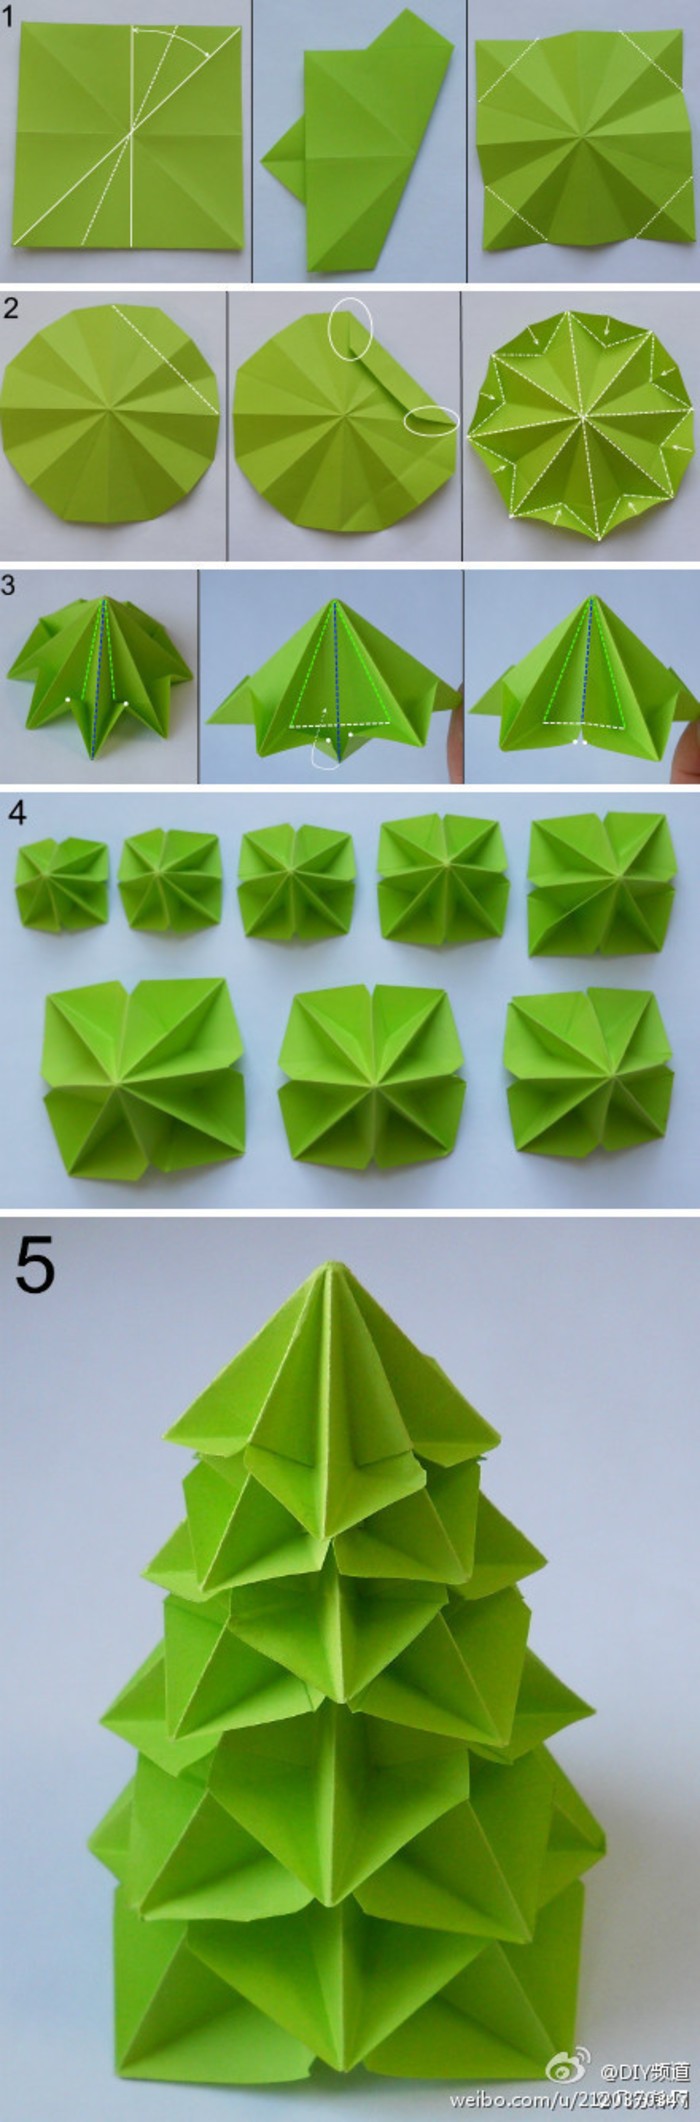 Papercraft Tree origami Modular Christmas Tree Folding Instructions